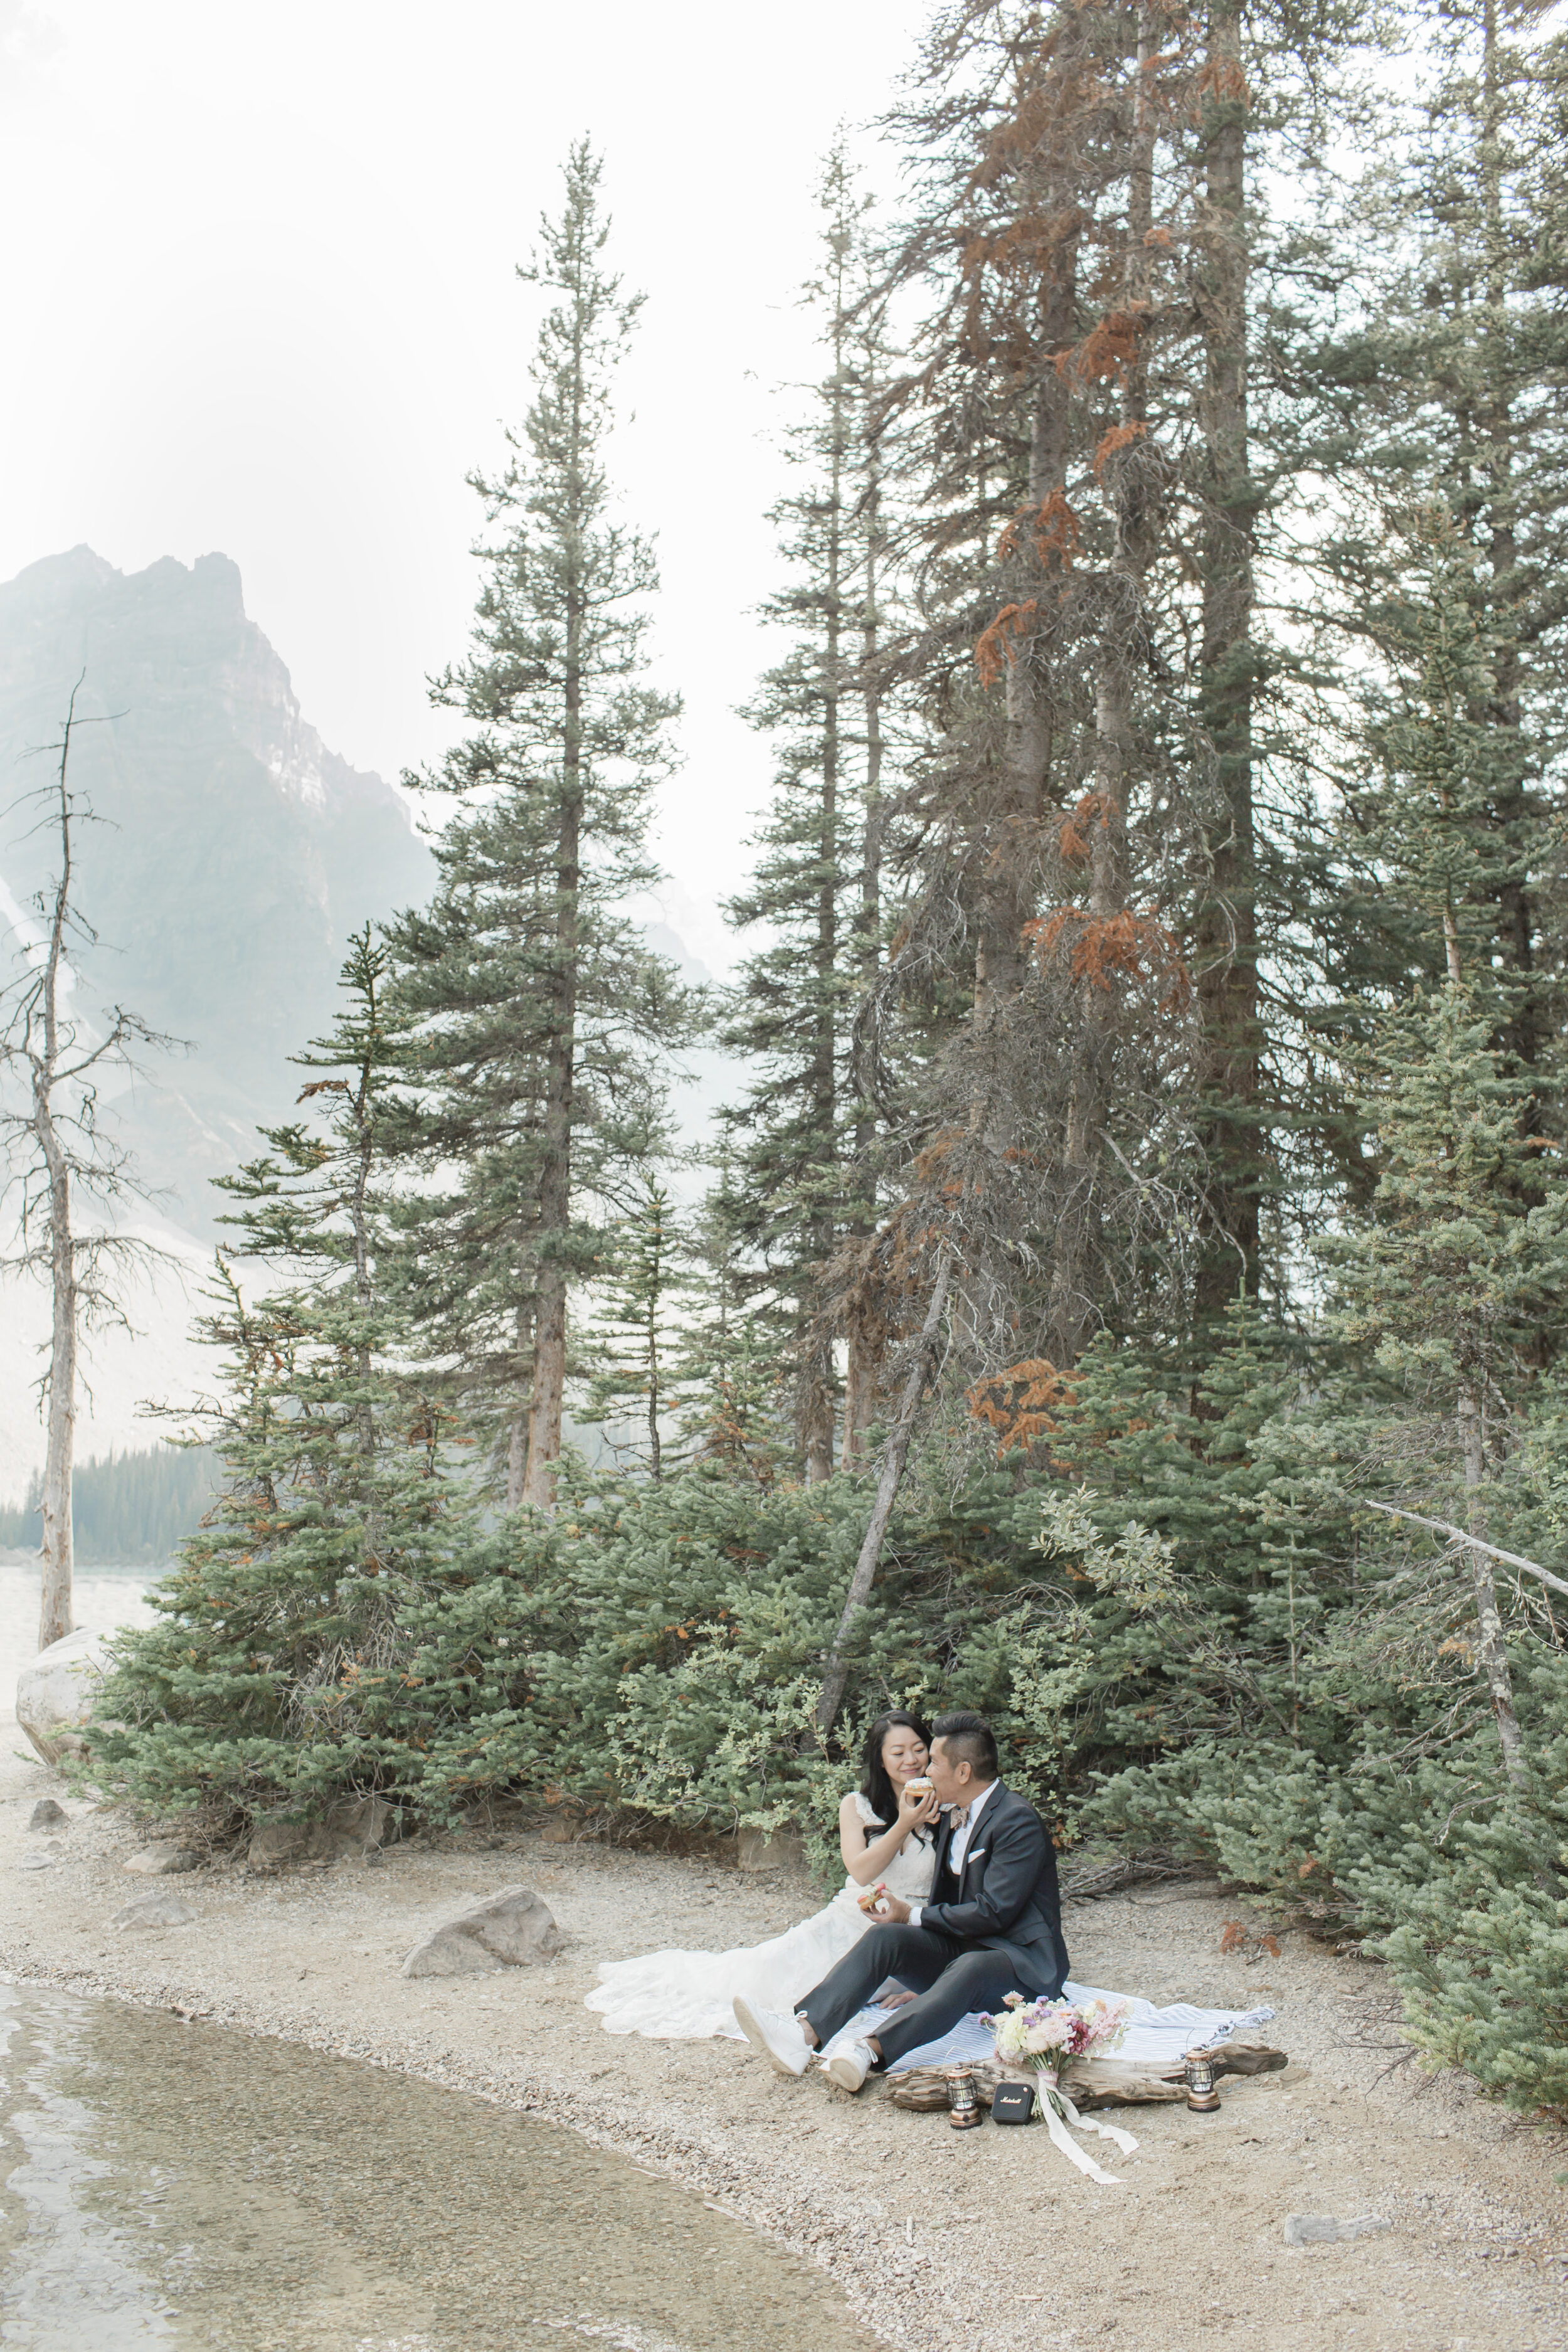 A newlywed couple shares a picnic on an alpine lake.